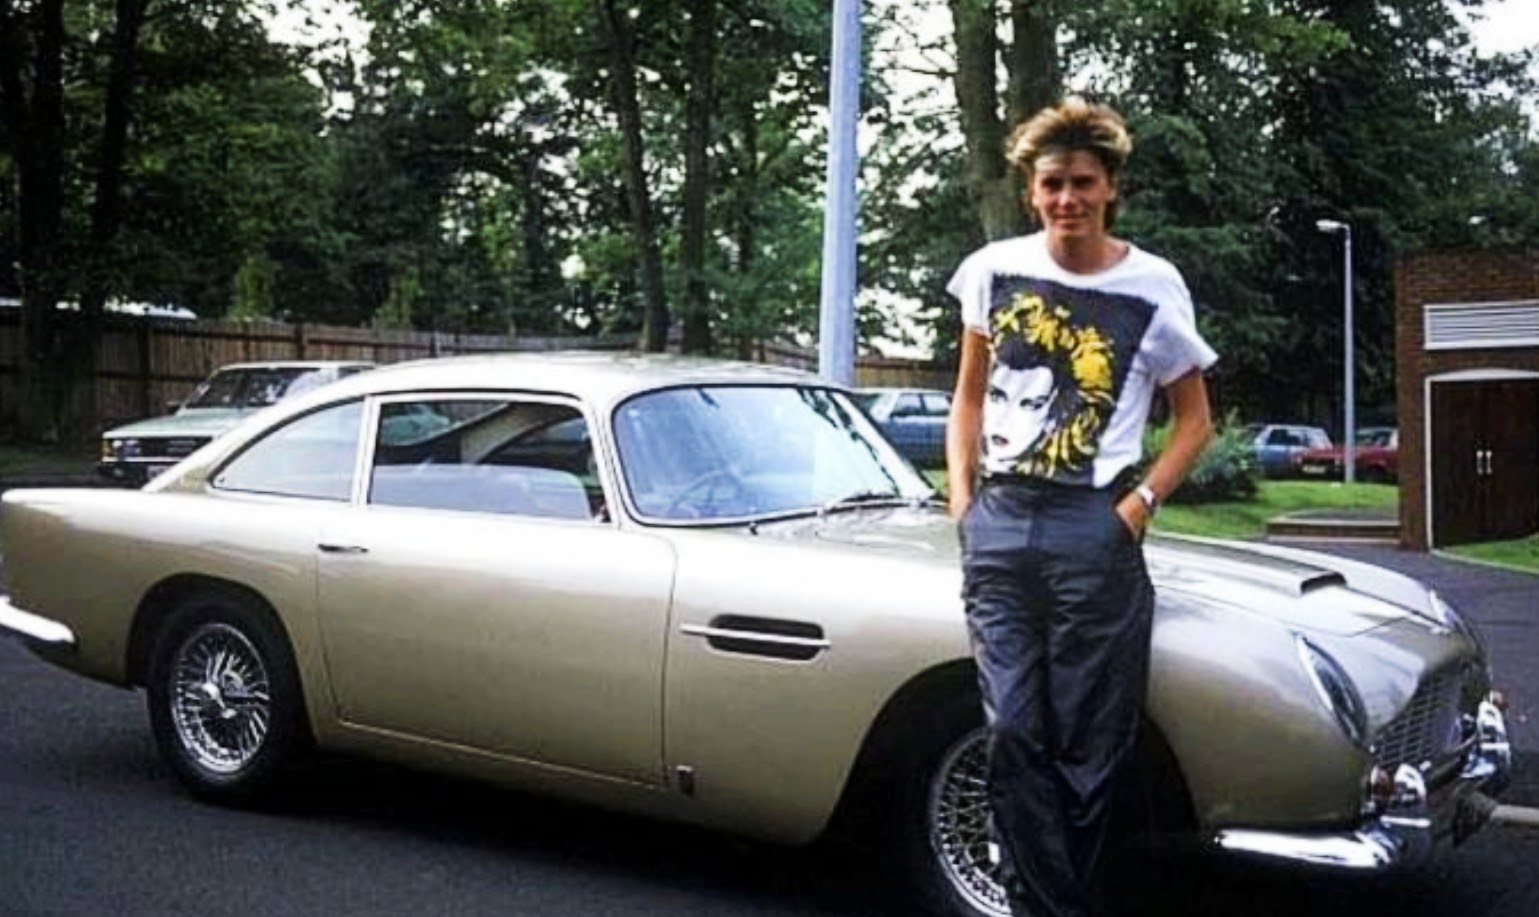 Bon Jovi singer John Taylor next to his Aston Martin DB5